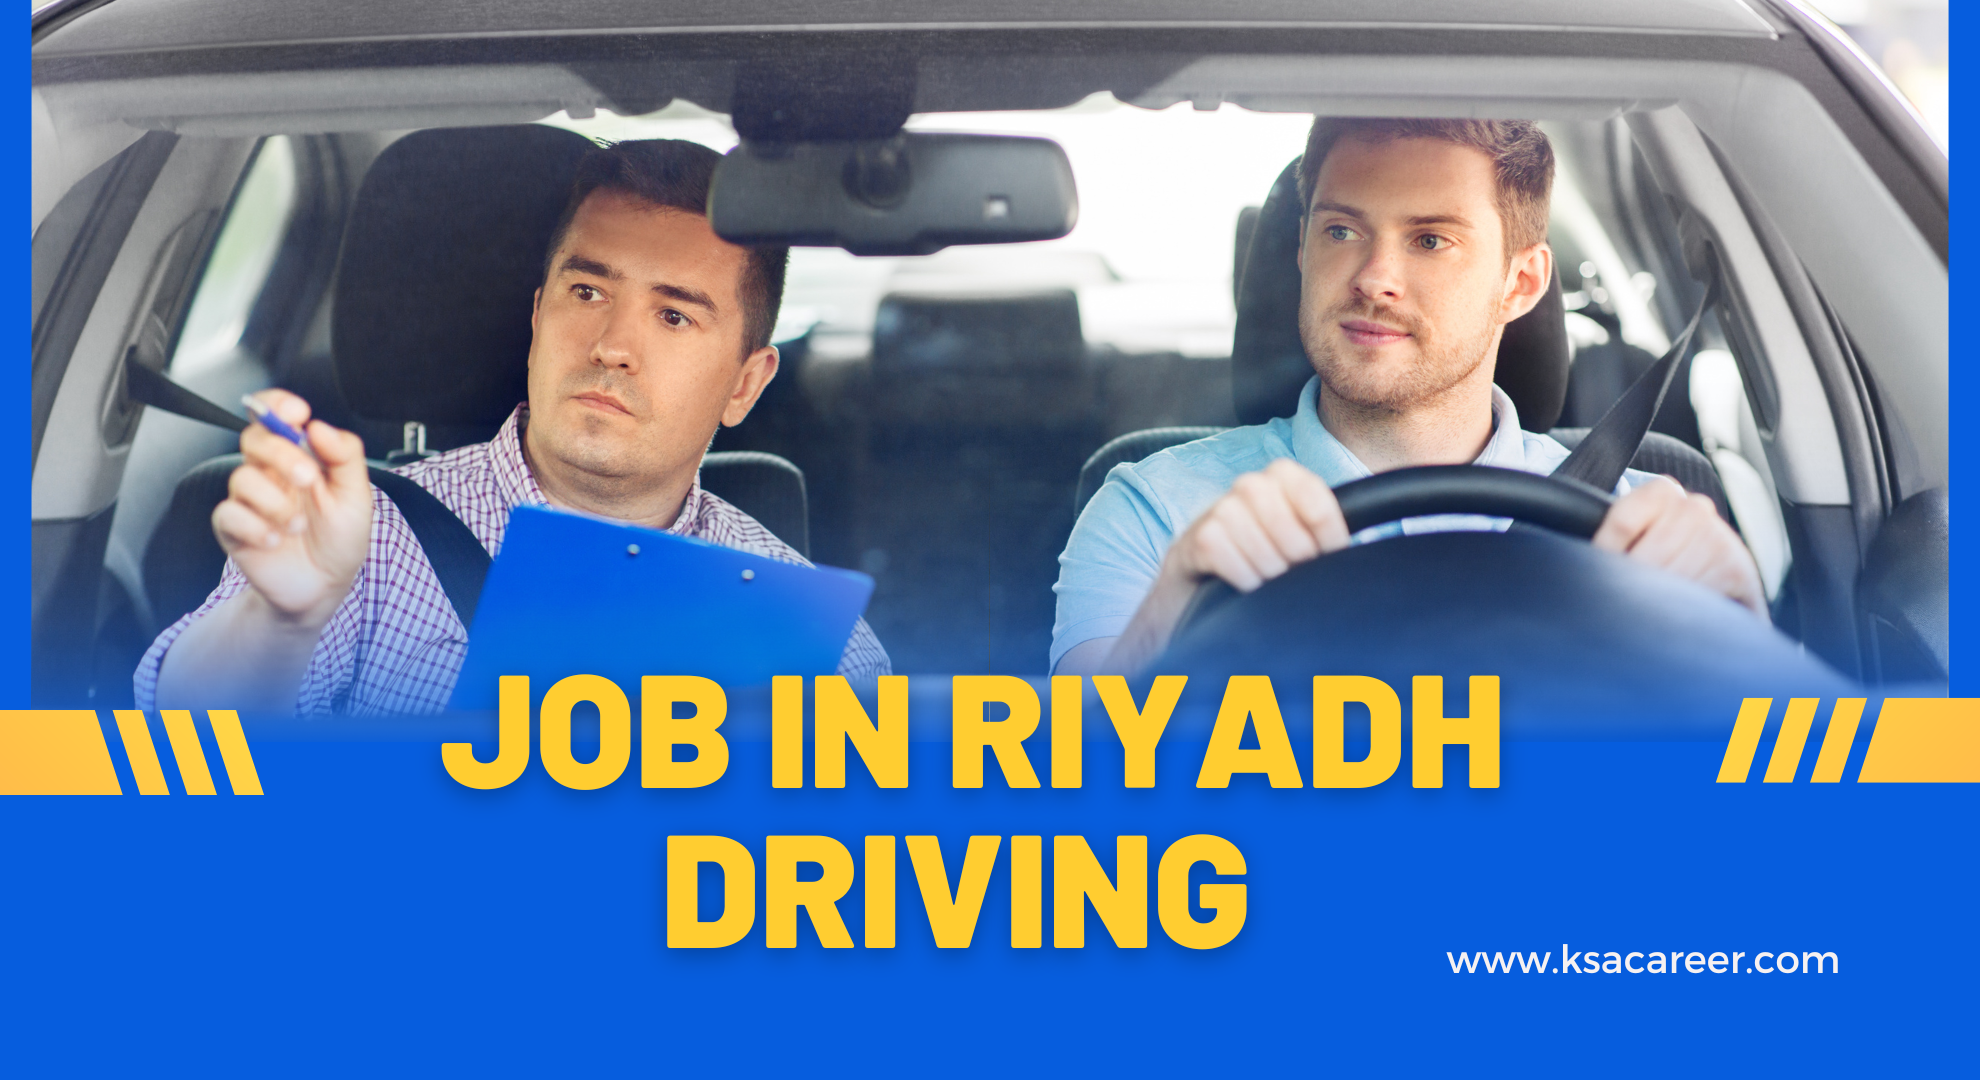 need job in riyadh driving 3000 to 4000 riyals